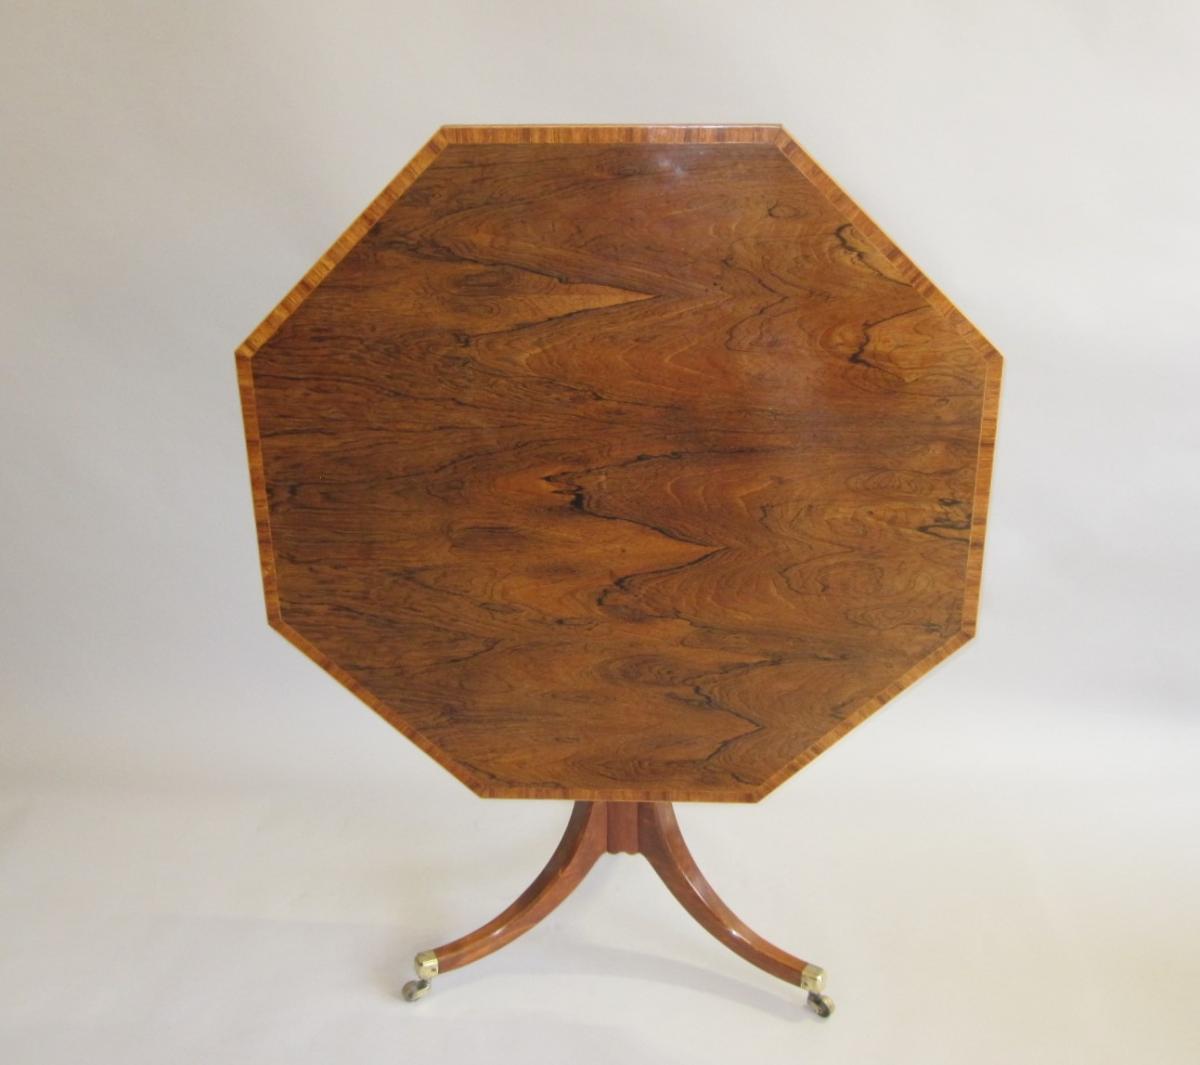 Sheraton rosewood octagonal table, circa 1795